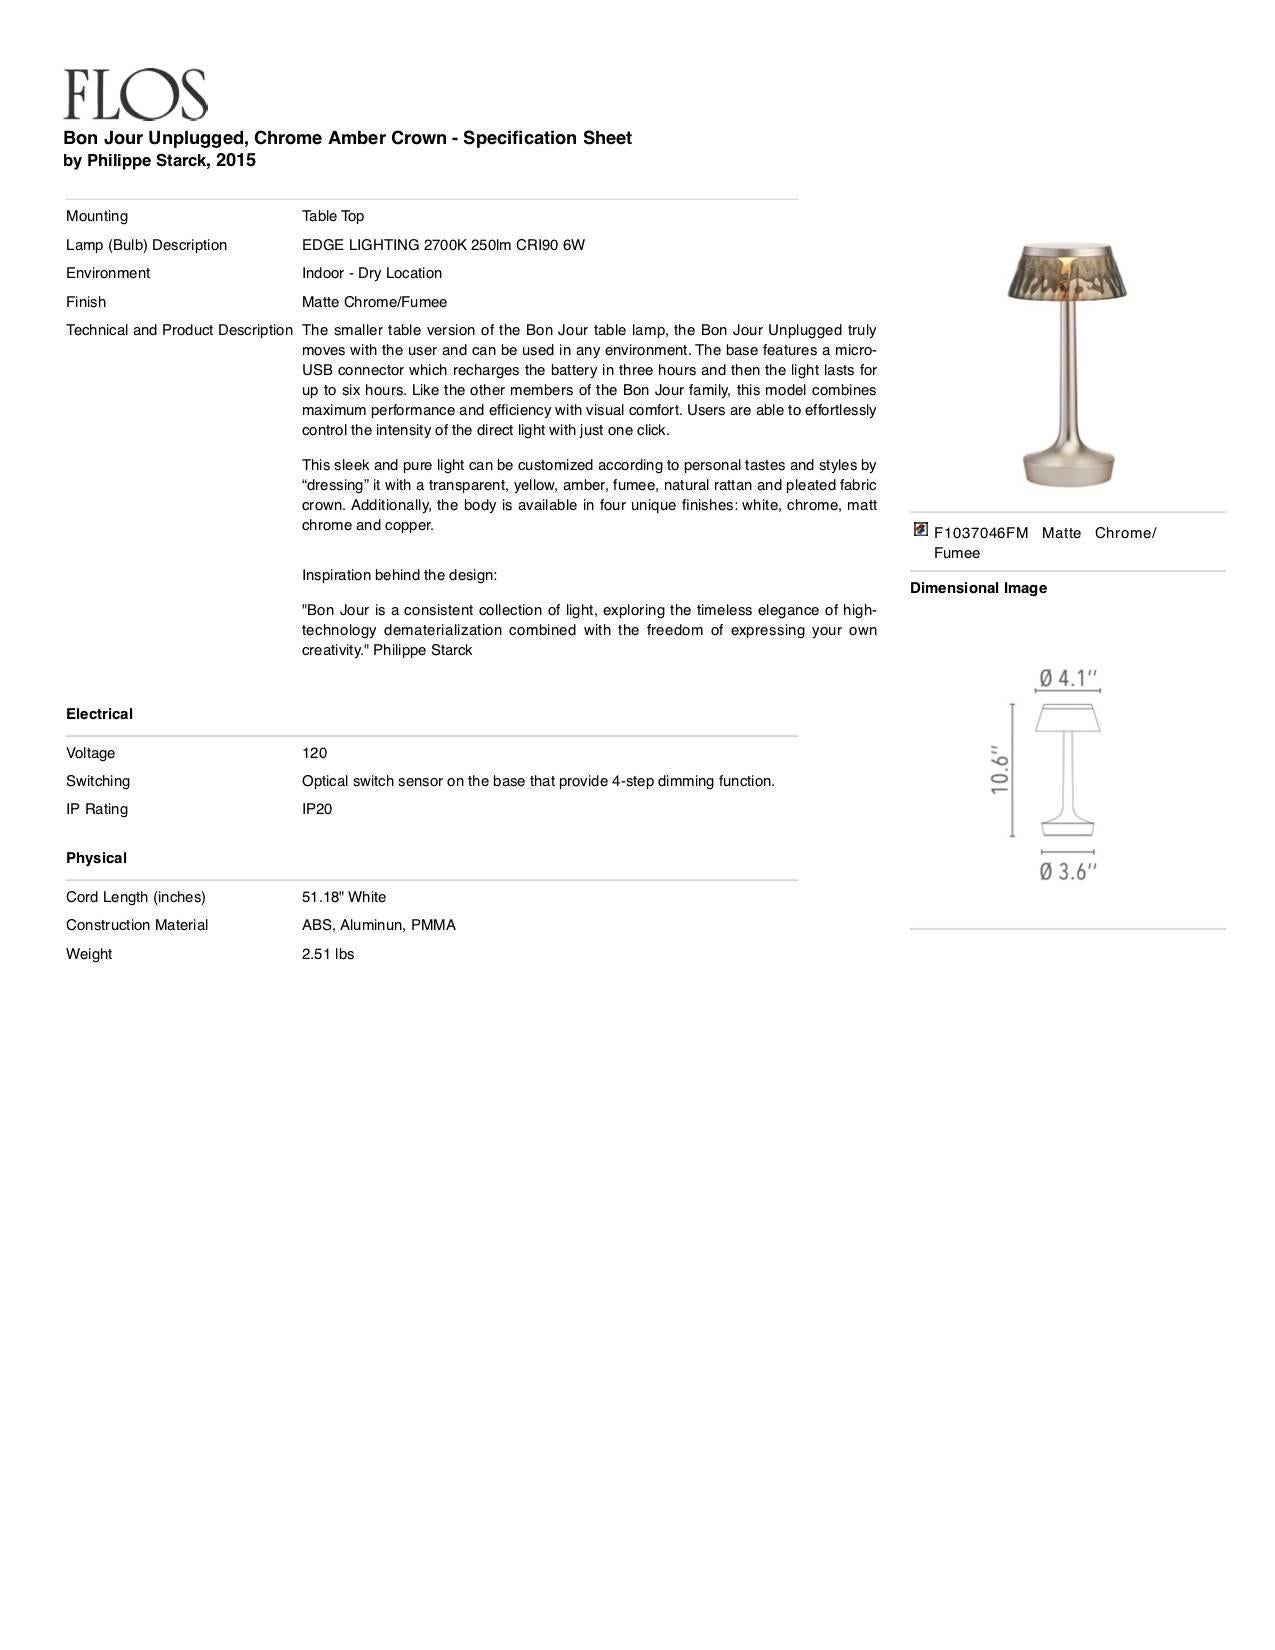 Modern FLOS Bon Jour Unplugged Matte Chrome Lamp w/ Rattan Crown by Philippe Starck For Sale